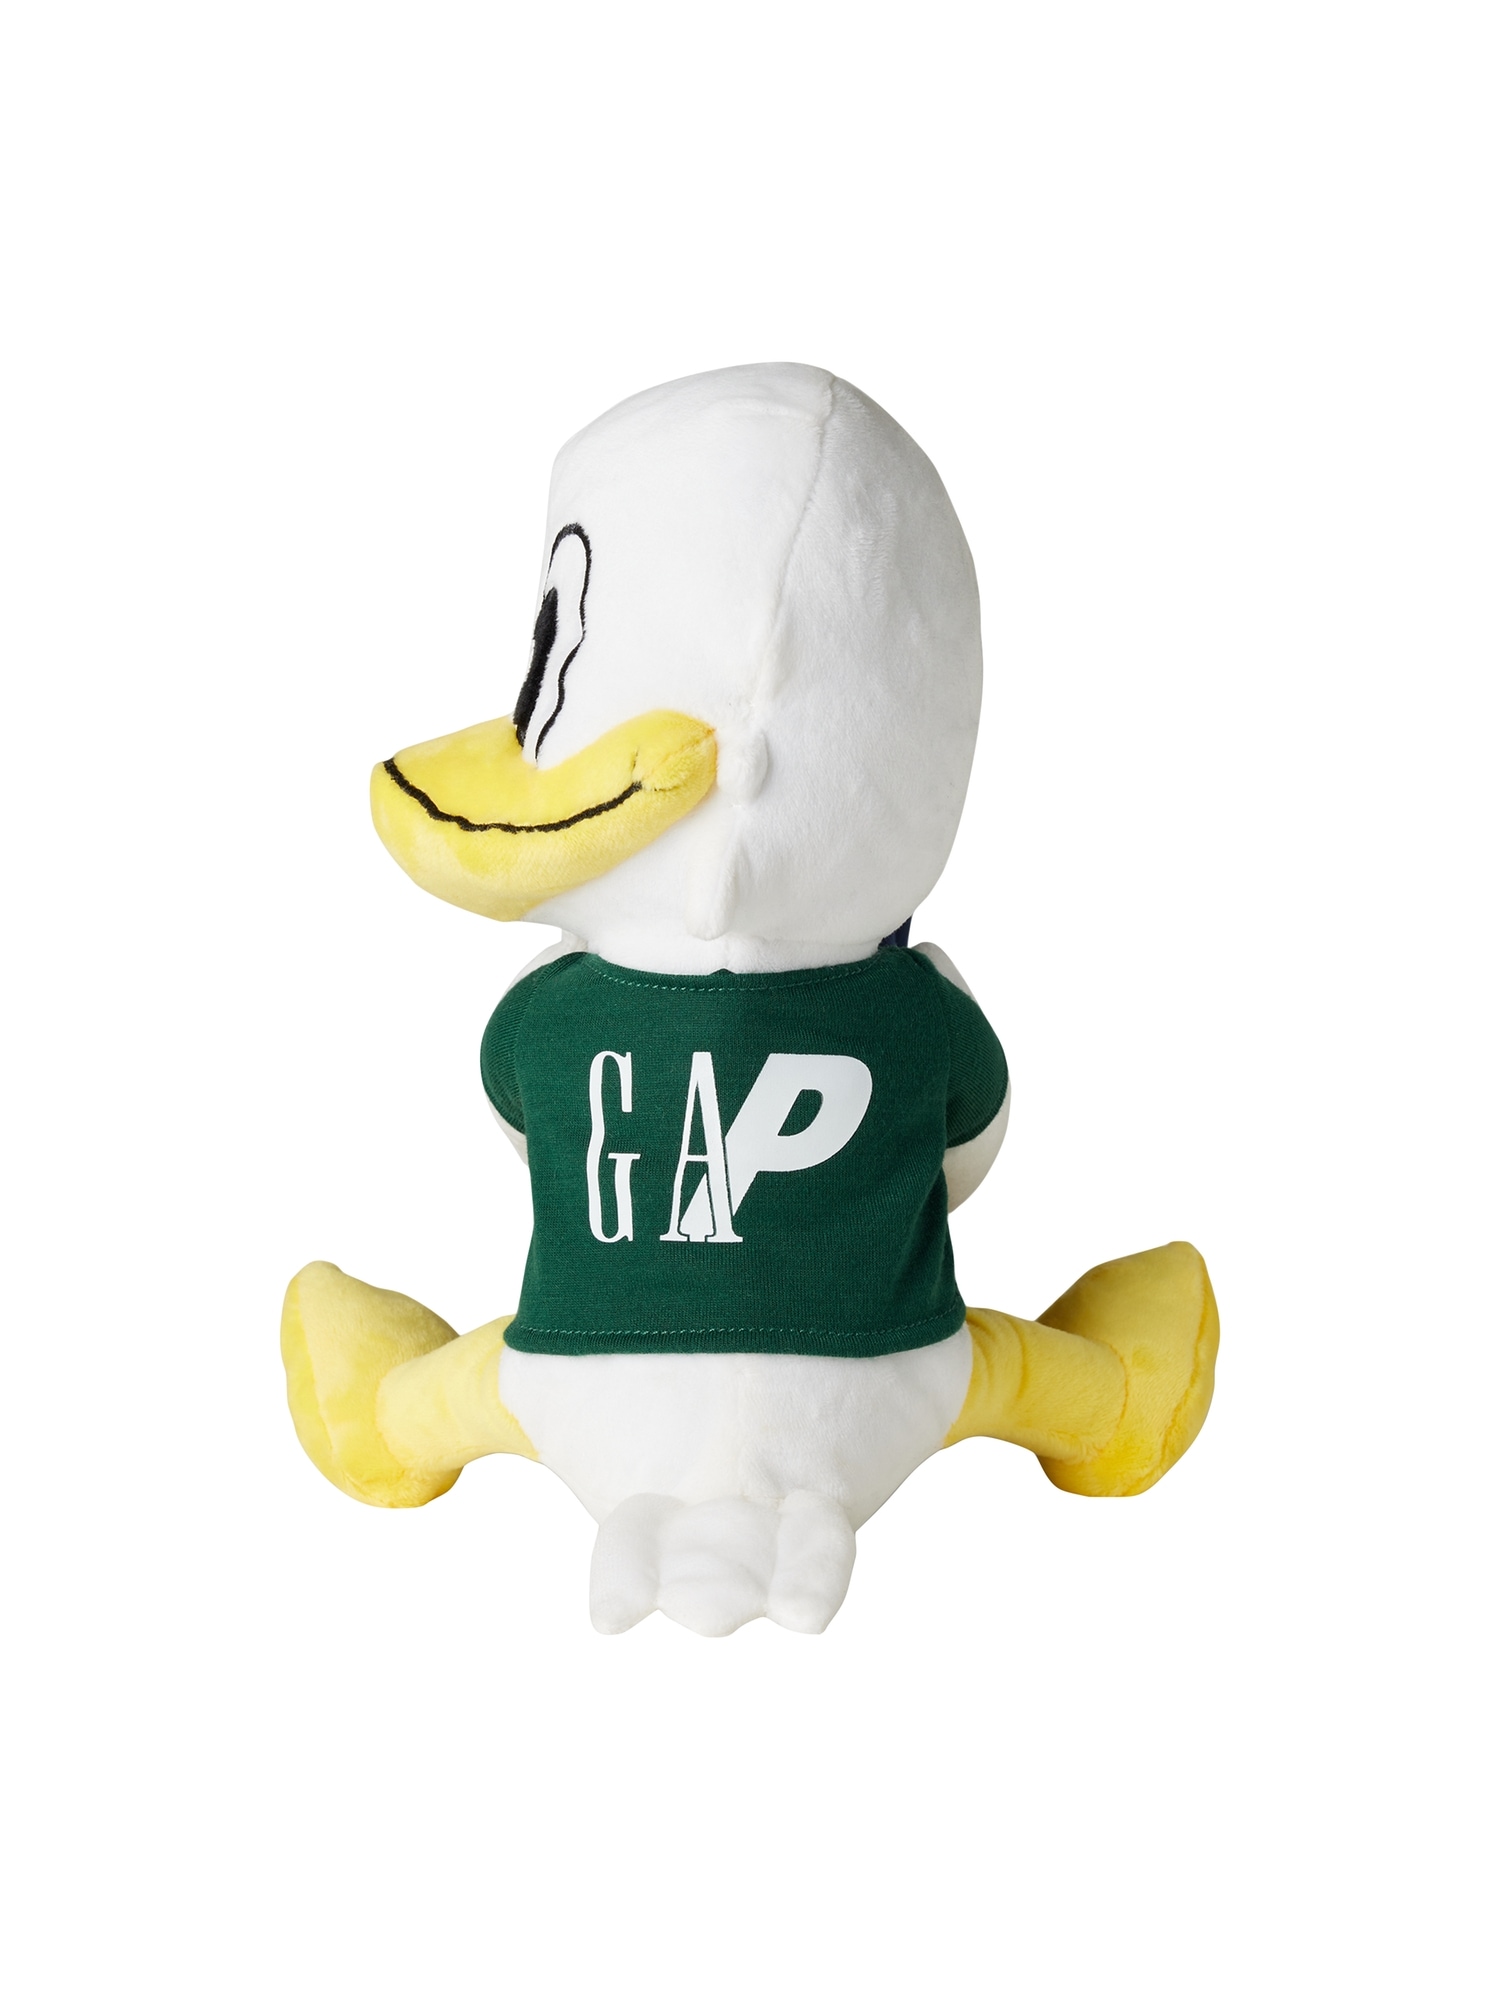 Palace Gap Duck Plush | Gap